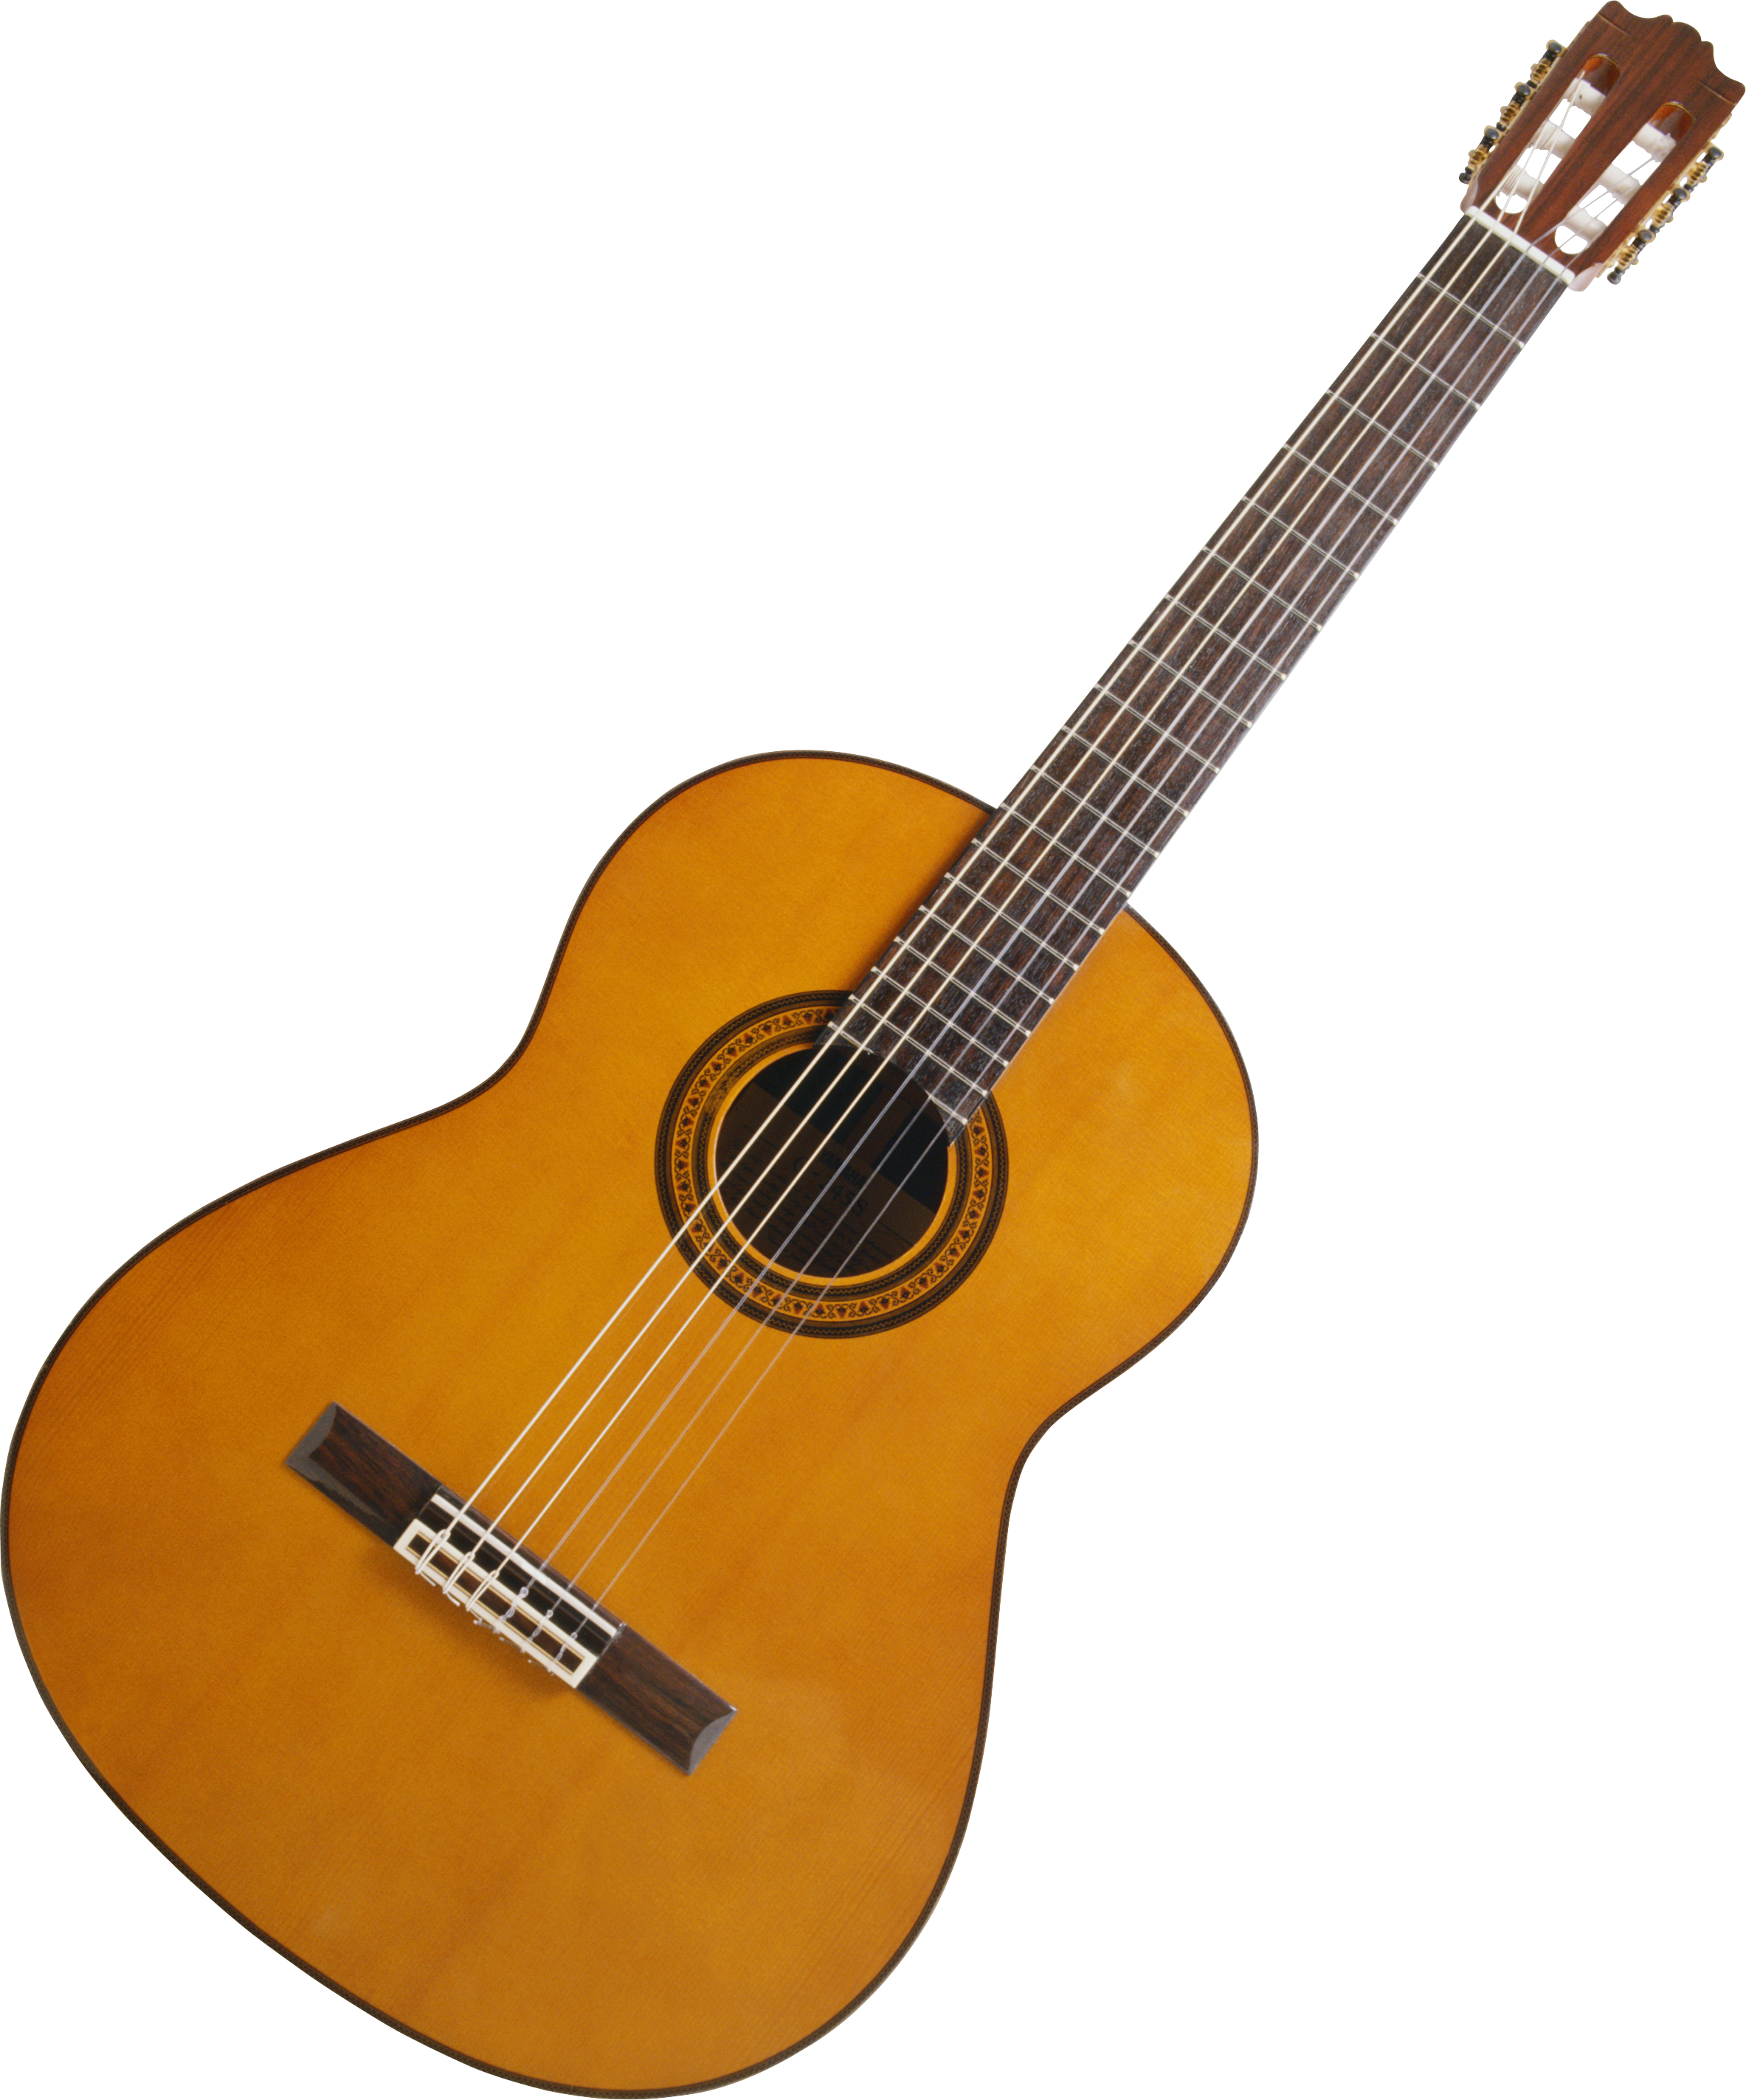 Acoustic Guitar PNG Image